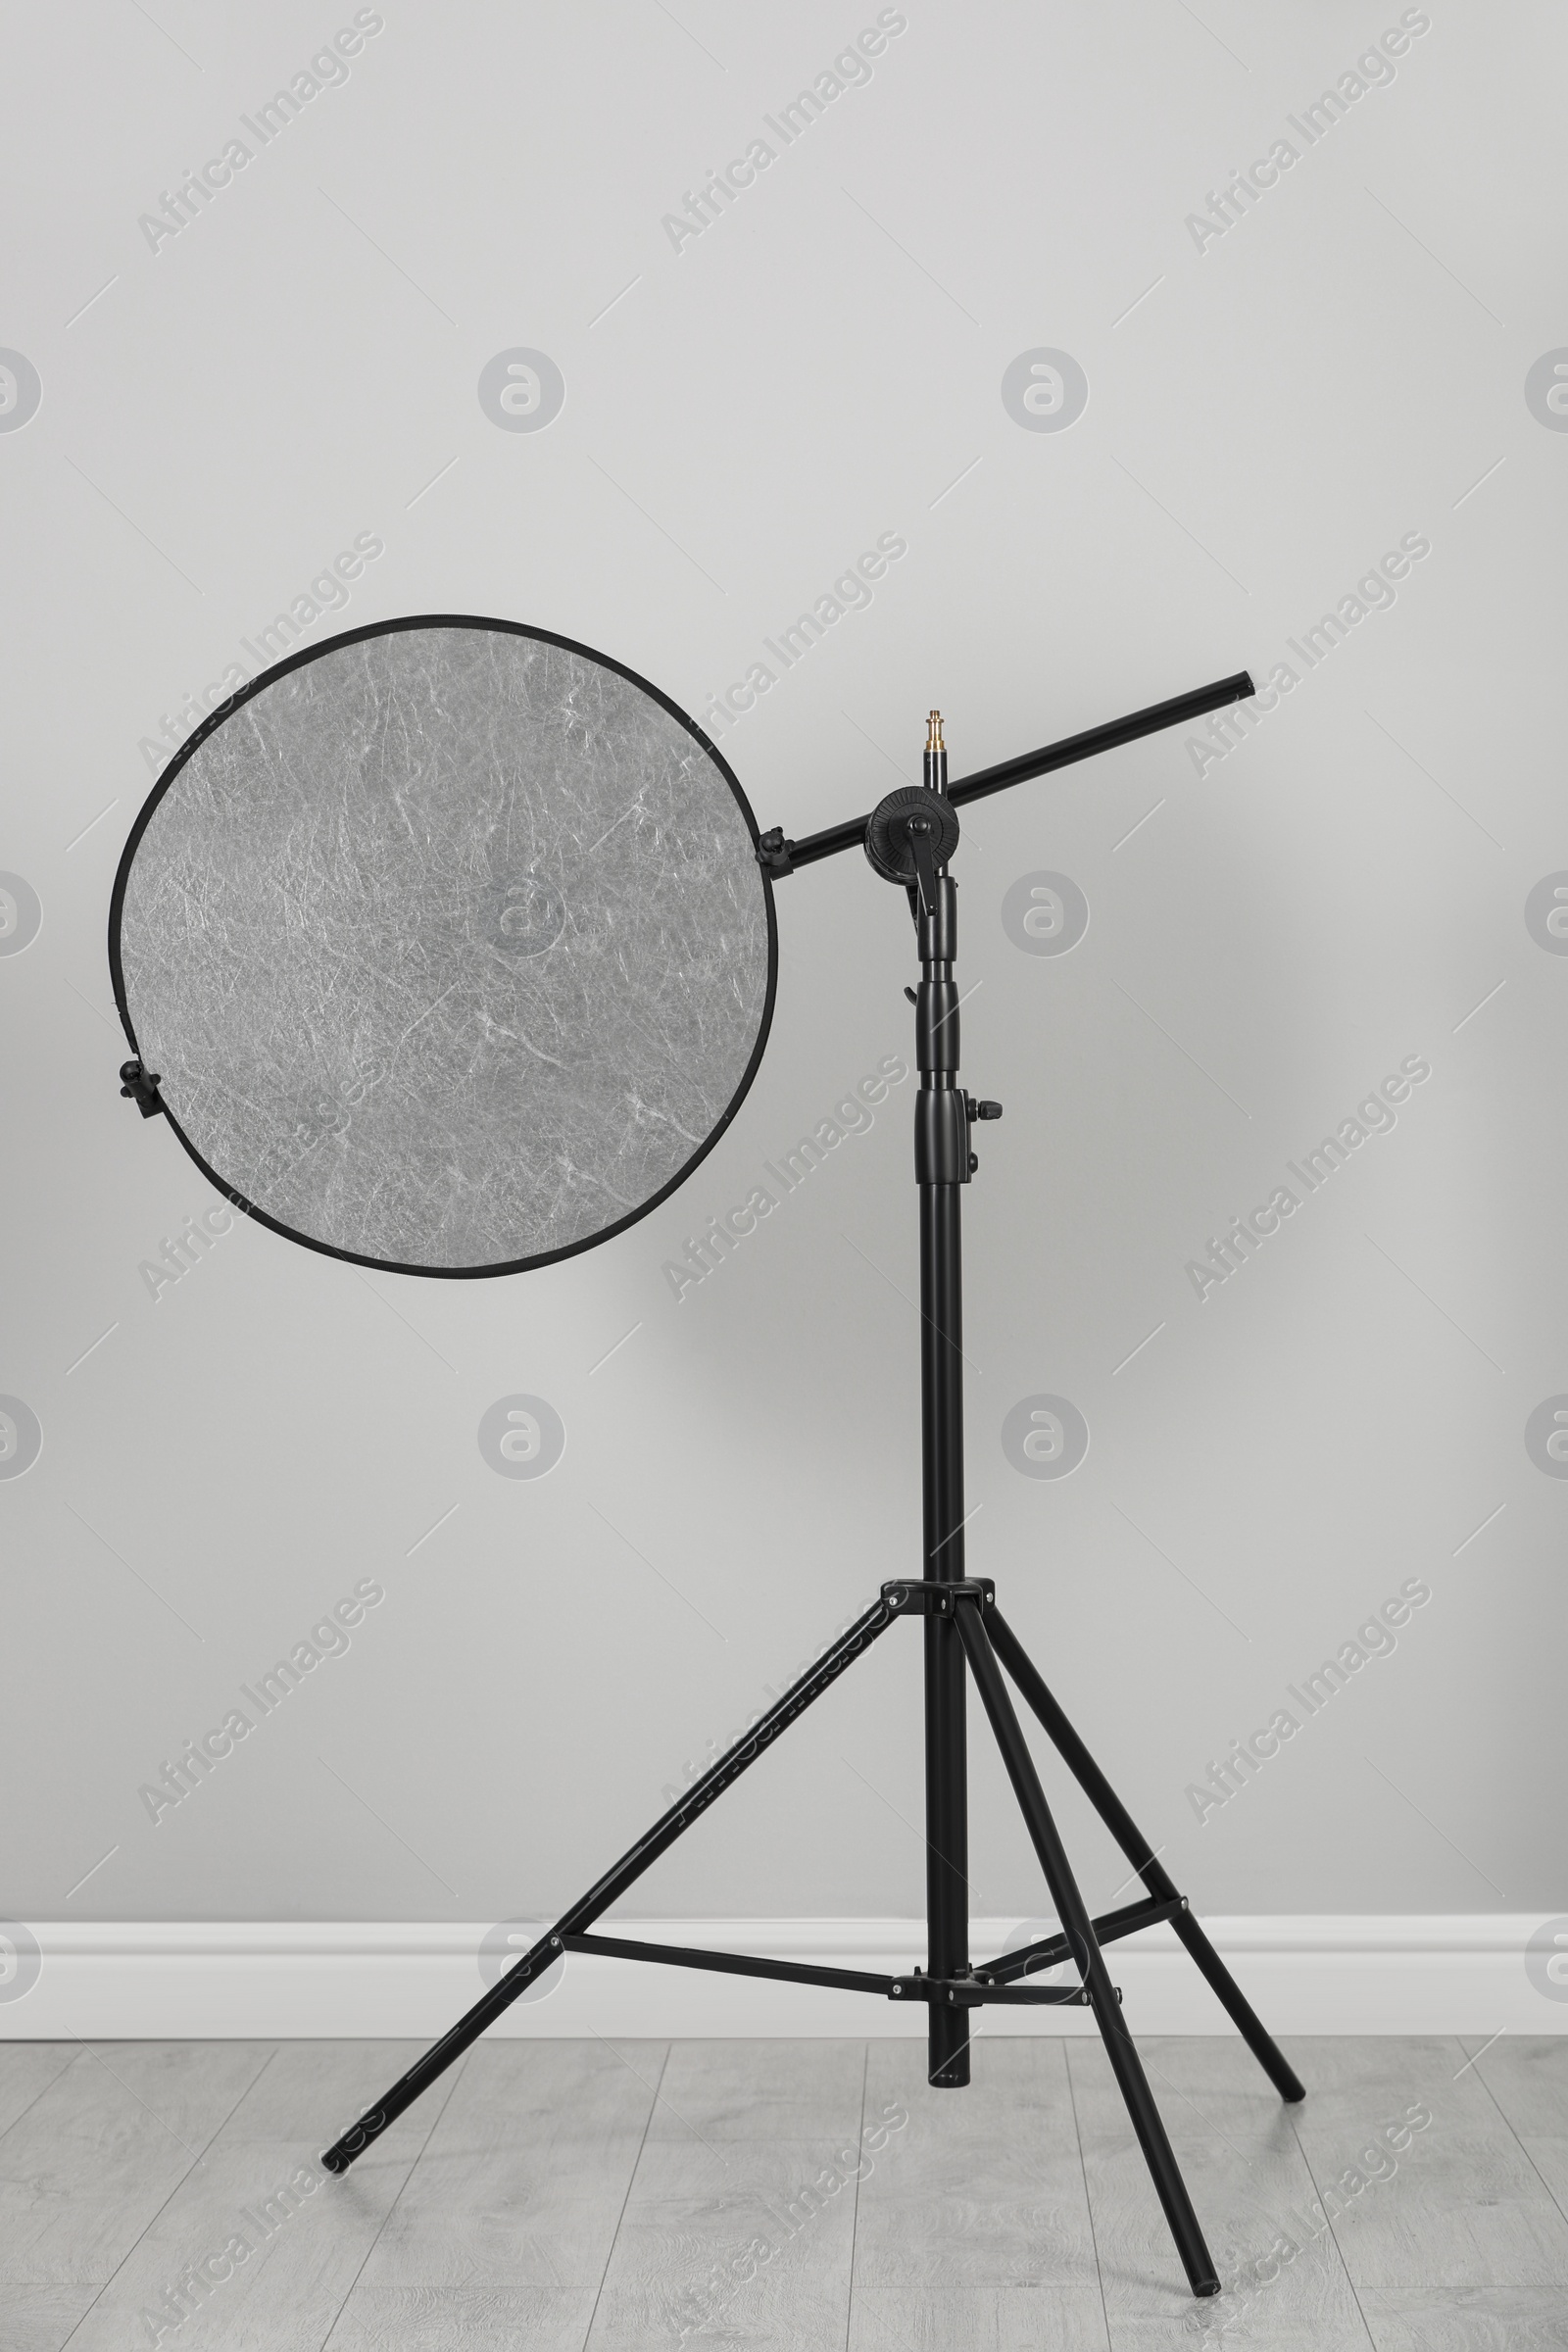 Photo of Studio reflector on tripod near grey wall indoors. Professional photographer's equipment